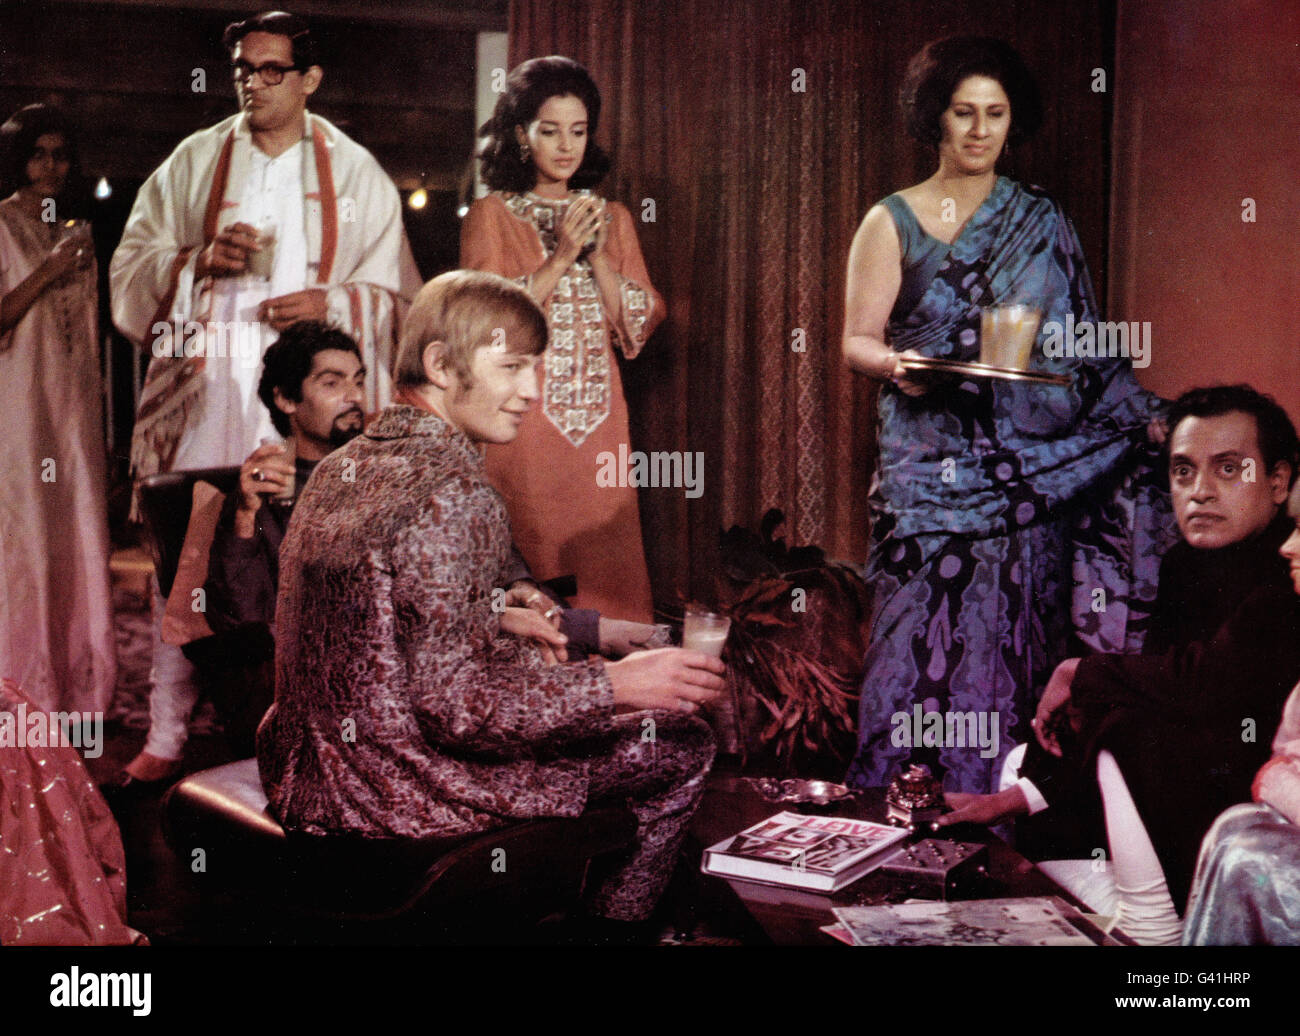 Il Guru, USA/Indien 1969, Regie: James Ivory, Darsteller: Michael York, Utpal Dutt (rechts) Foto Stock